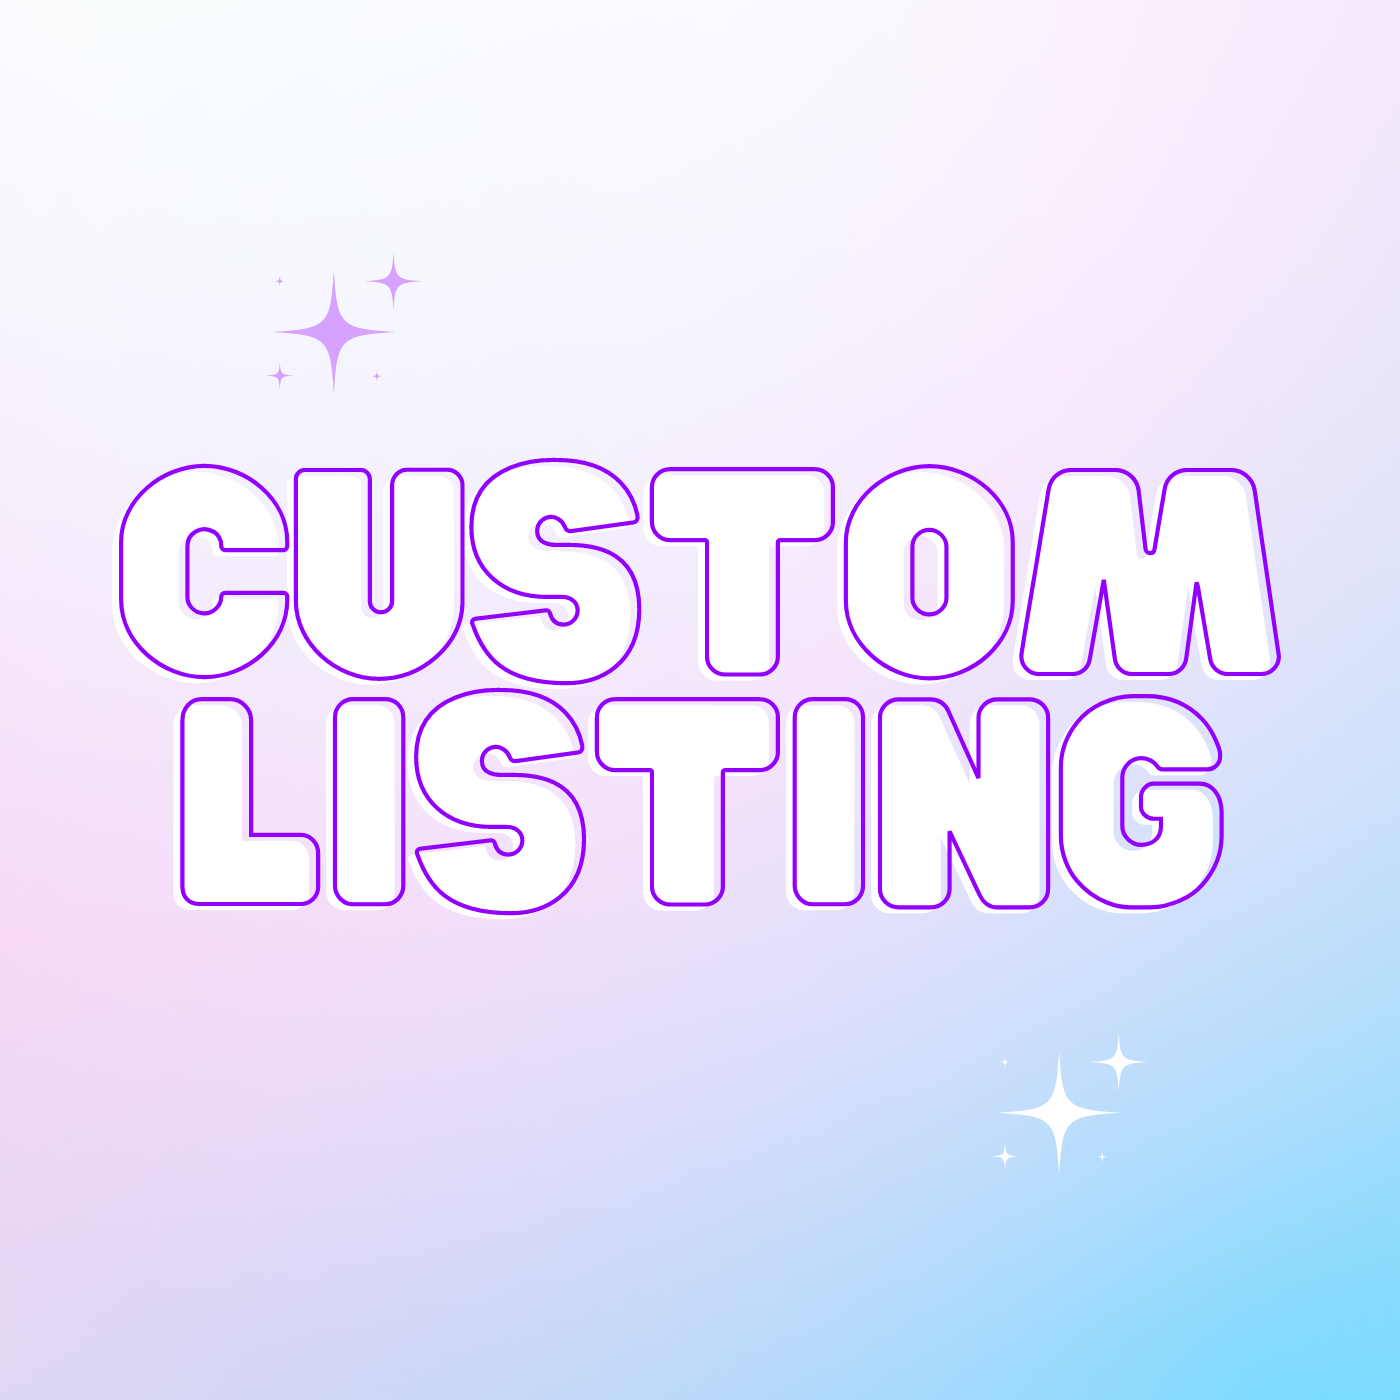 Custom Listing for Lindsay